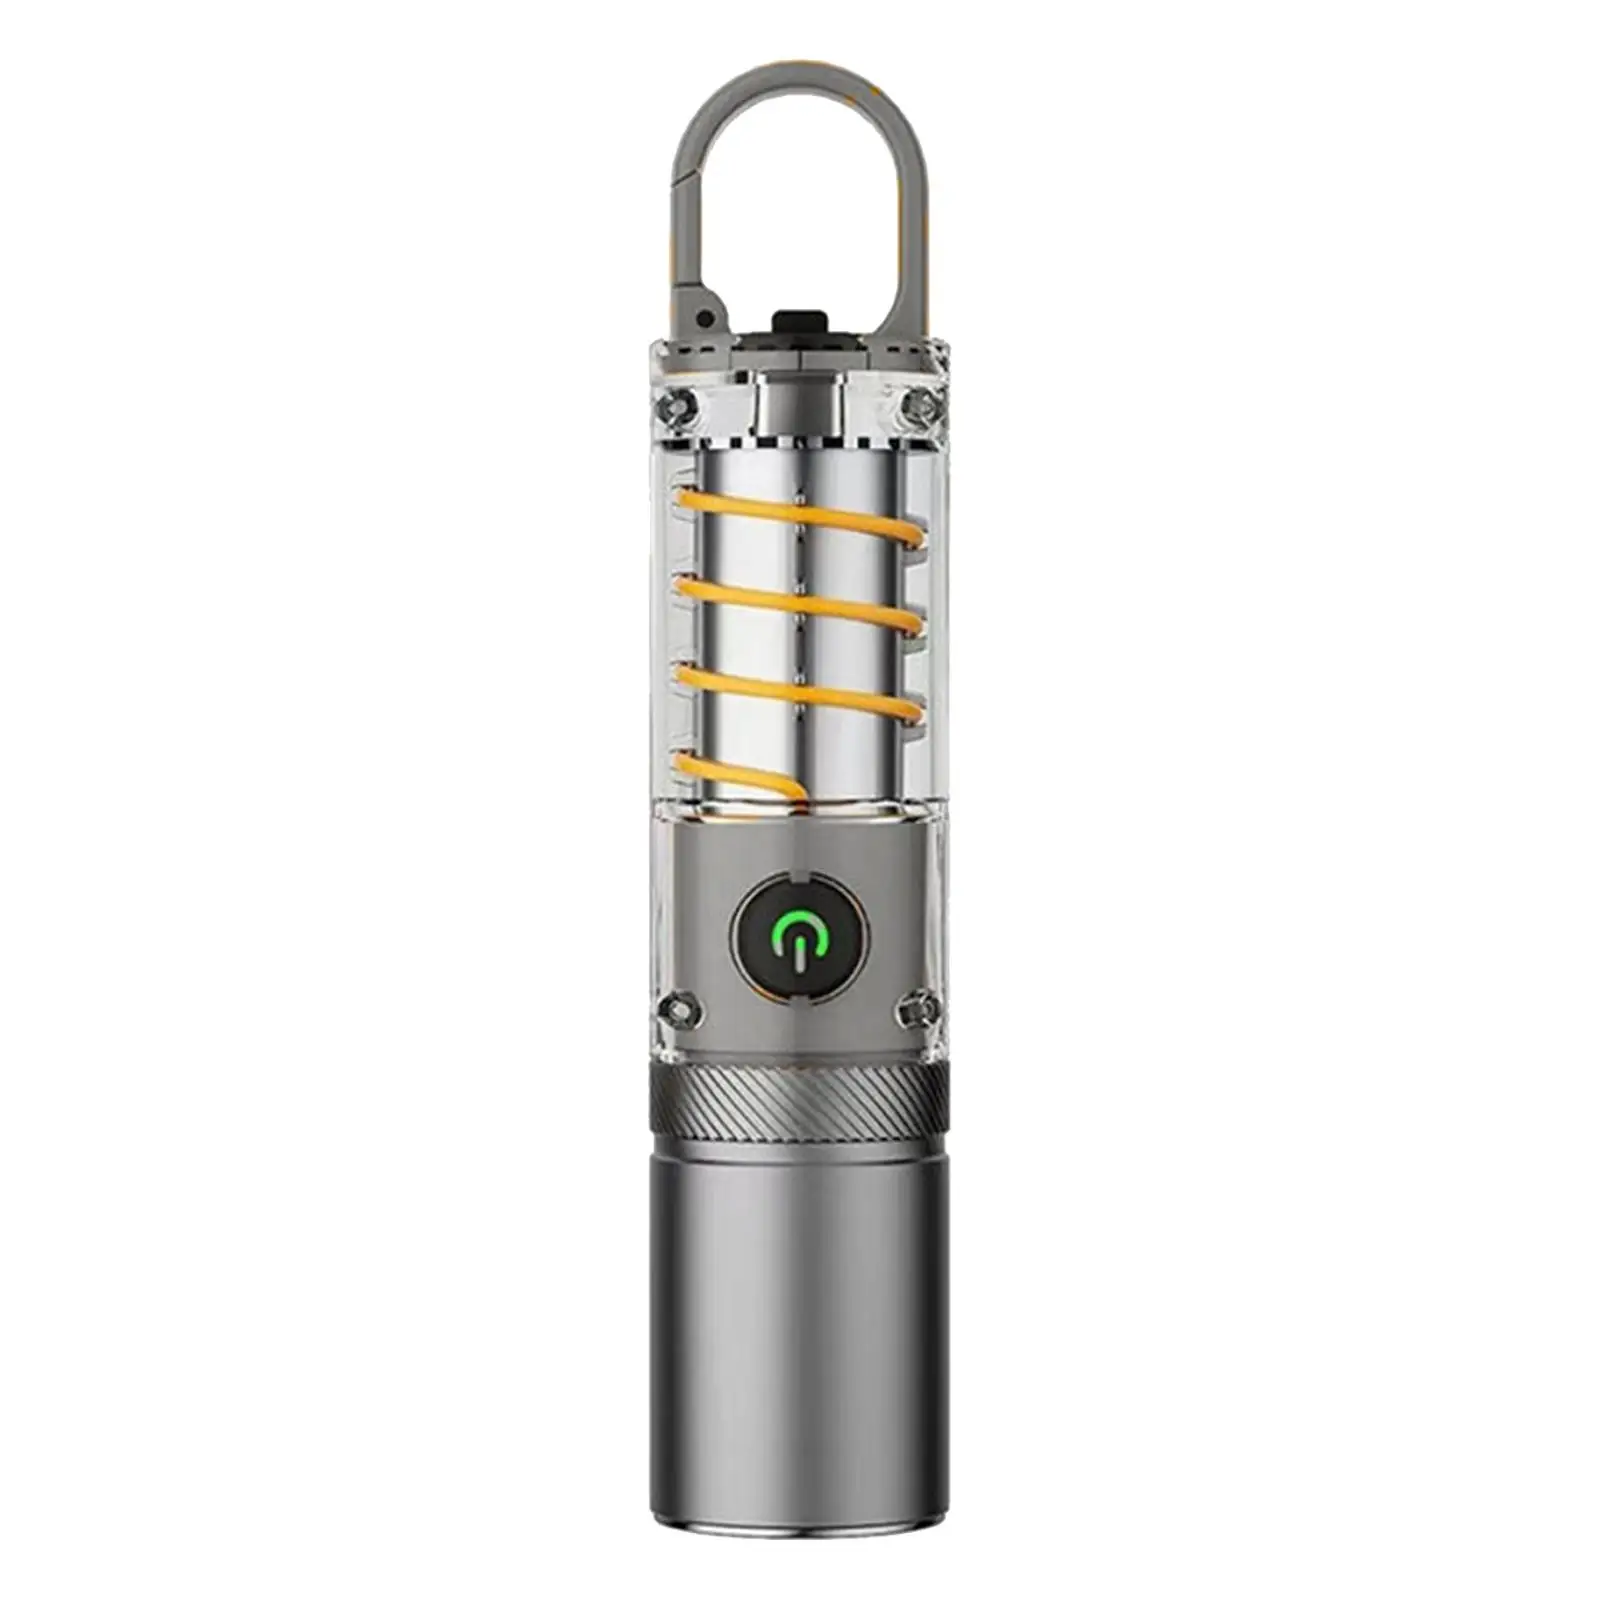 Portable flashlights Keychain 5 Modes Home Hiking Outdoor Handheld Torch Light for Lighting Walking Garage Emergency Travel